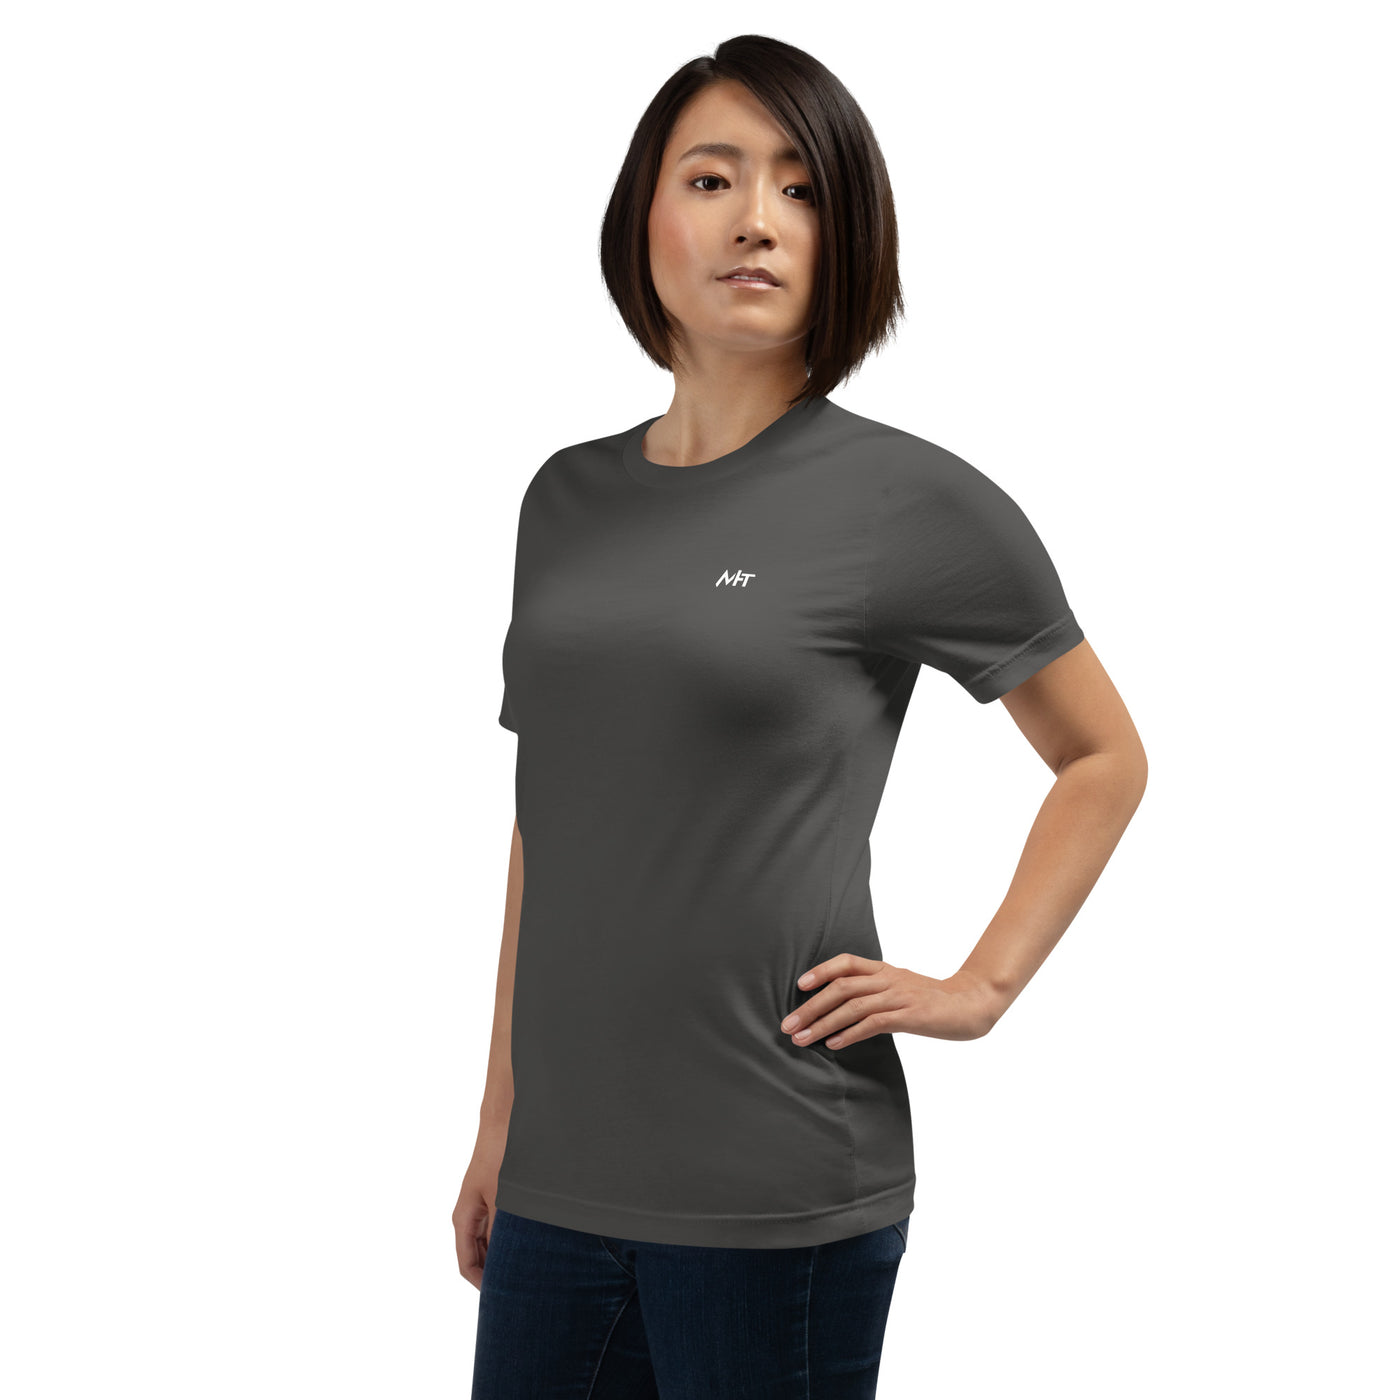 ISH (MAHFUZ) - Unisex t-shirt ( Back Print )